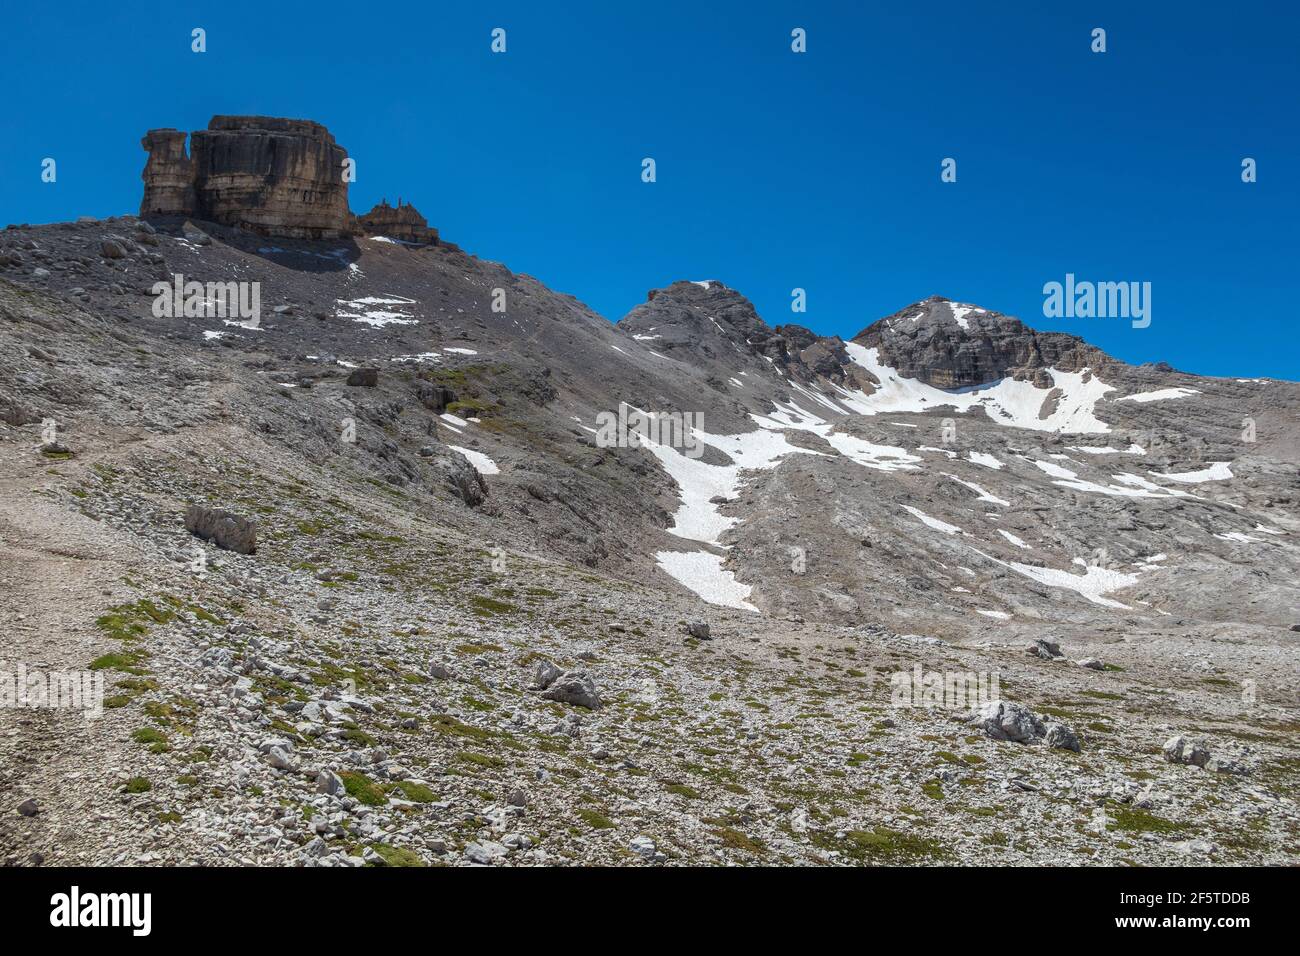 Blick auf Castello, Casale, Cavallo Berggipfel. Vallon Bianco Tal. Die Dolomiten. Italienische Alpen. Europa. Stockfoto